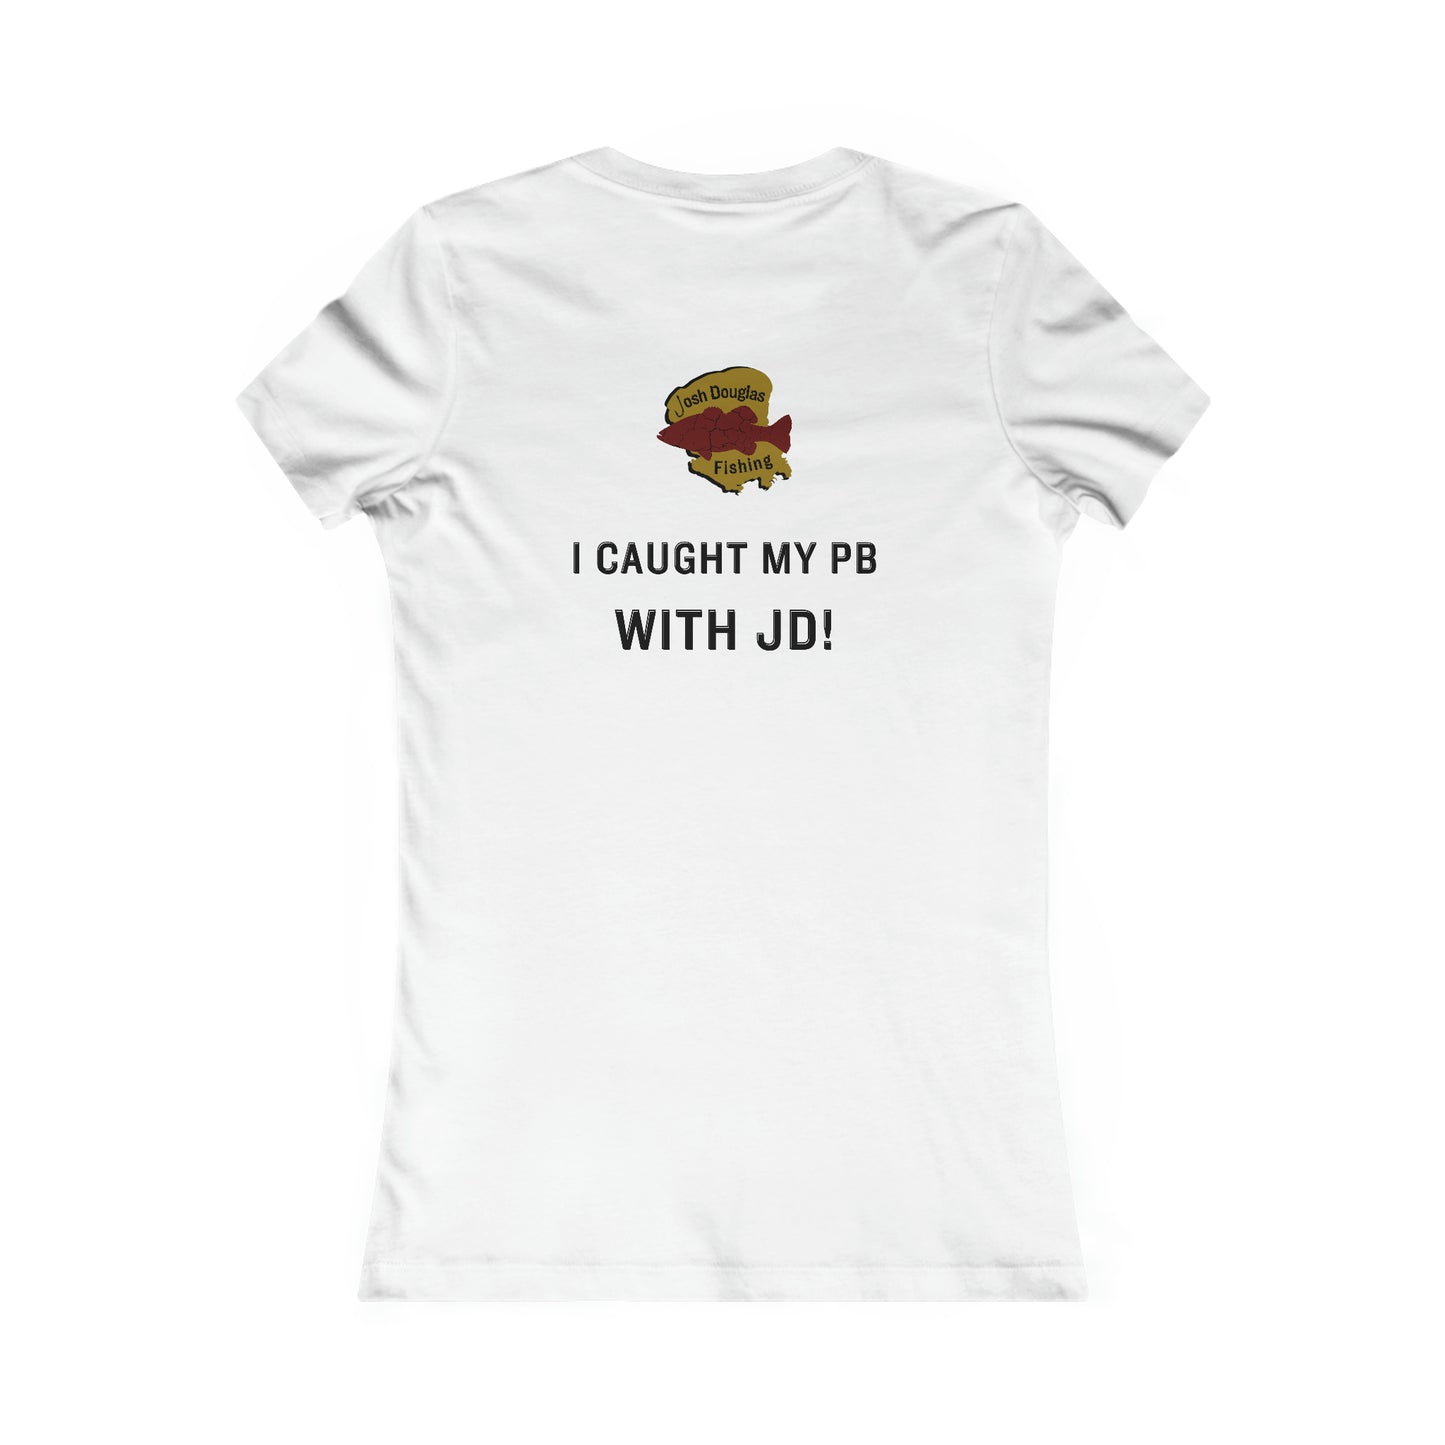 Caught My PB with JD Women's T-Shirt | Josh Douglas Fishing Apparel